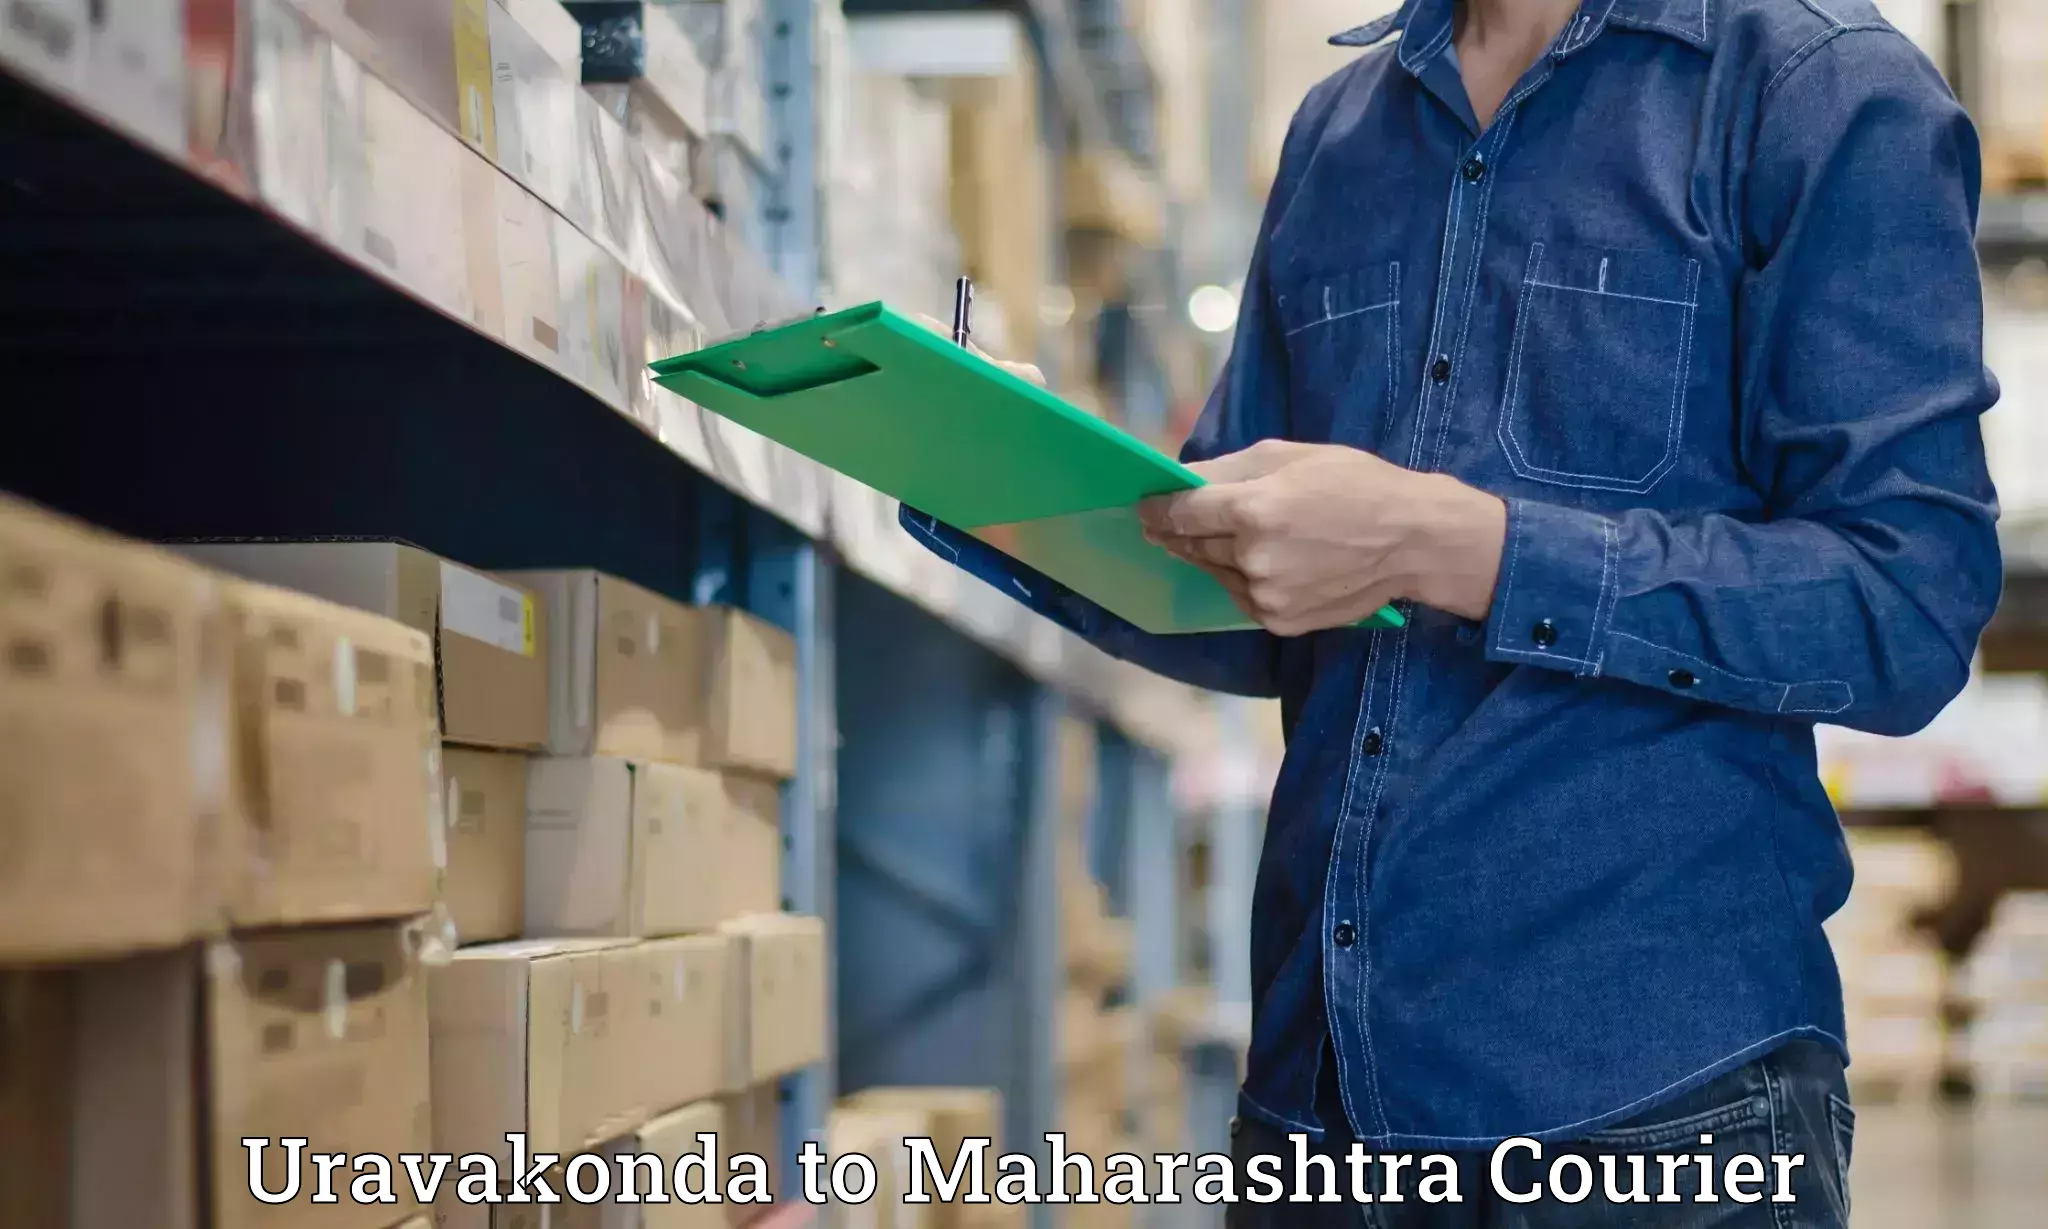 Luggage delivery system Uravakonda to Maharashtra